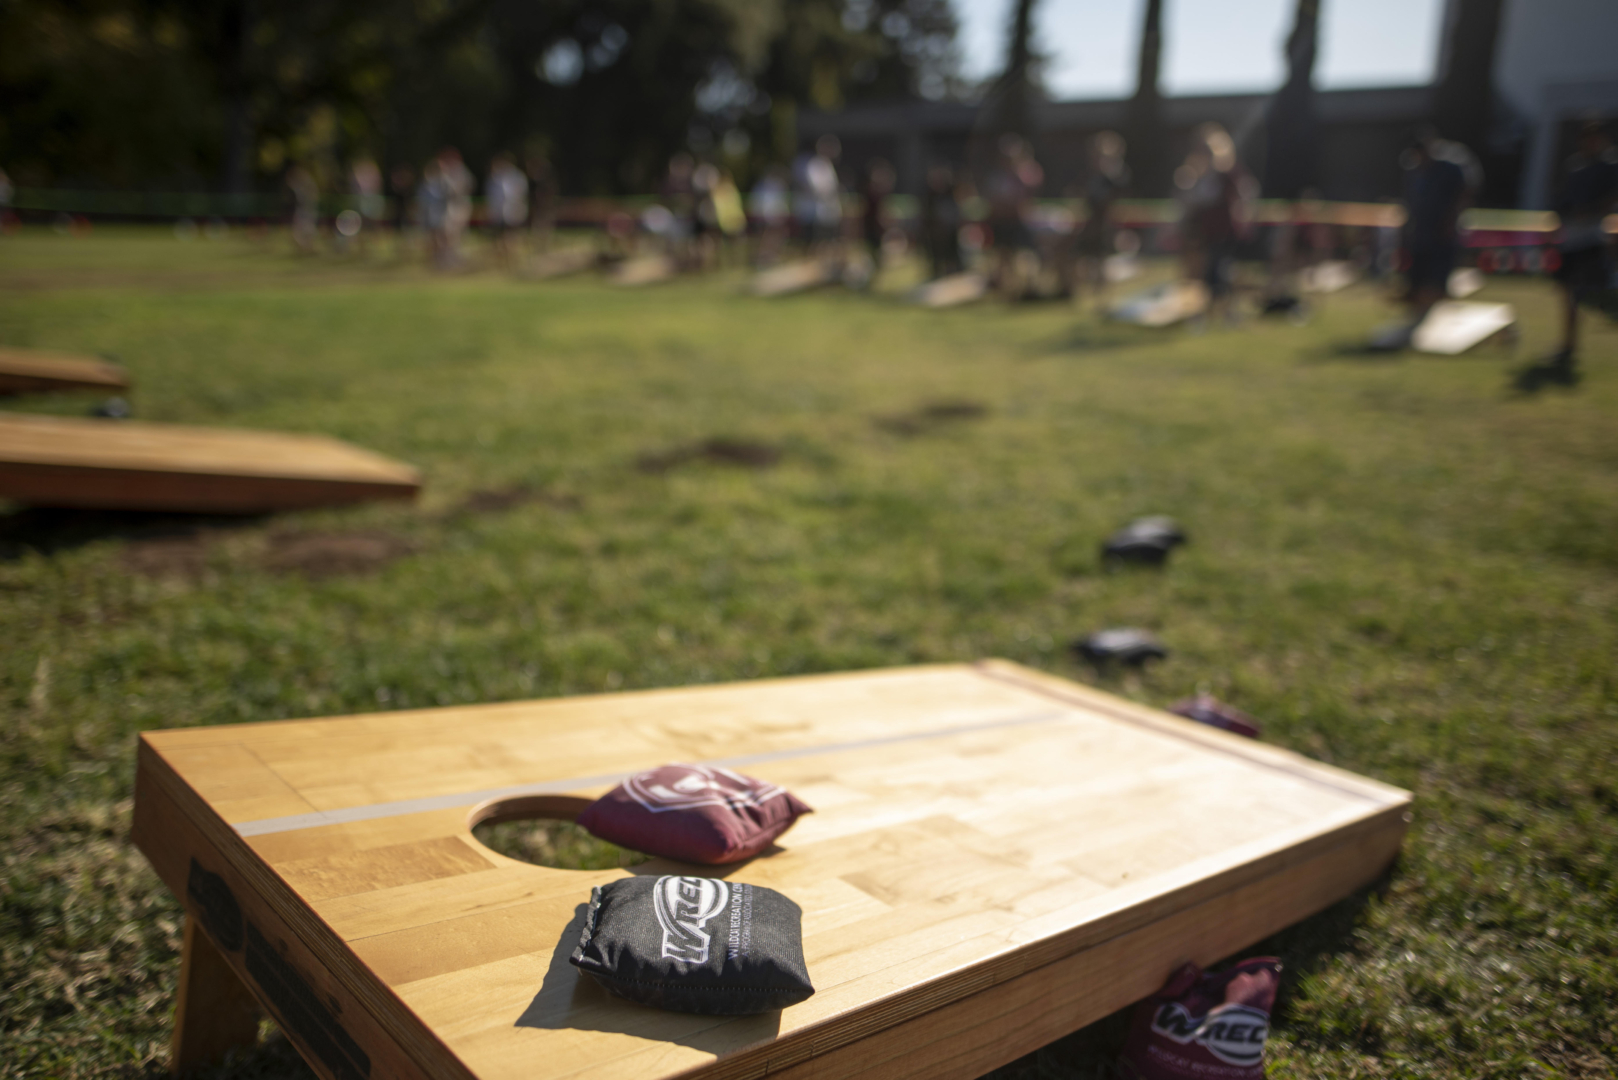 WREC-branded bean bags lay on a corn hole board in the sun. 